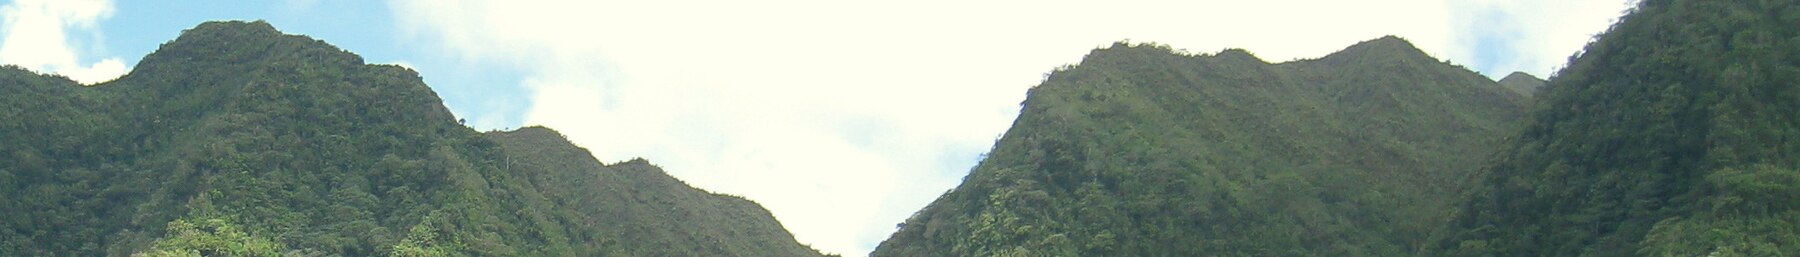 Oahu (Hawaii) banner.jpg